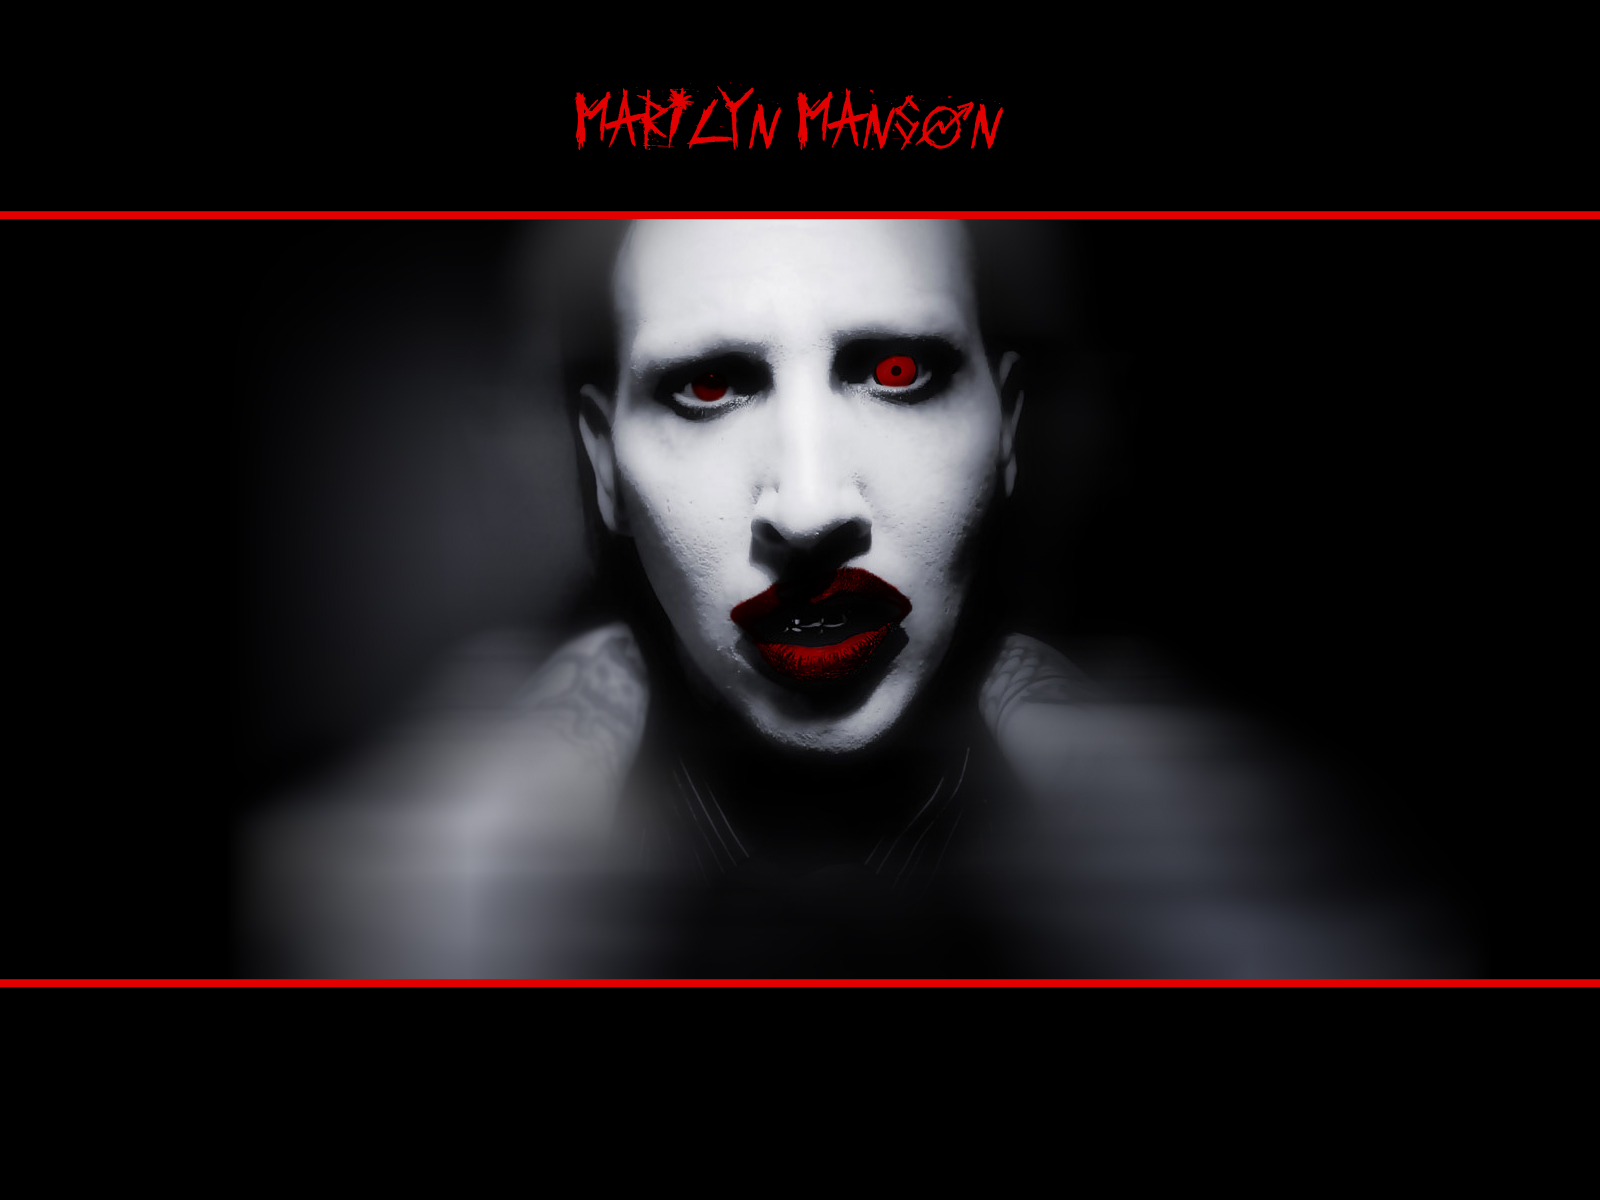 Marilyn Manson Industrial Metal Rock Heavy Shock Gothic Glam Poster